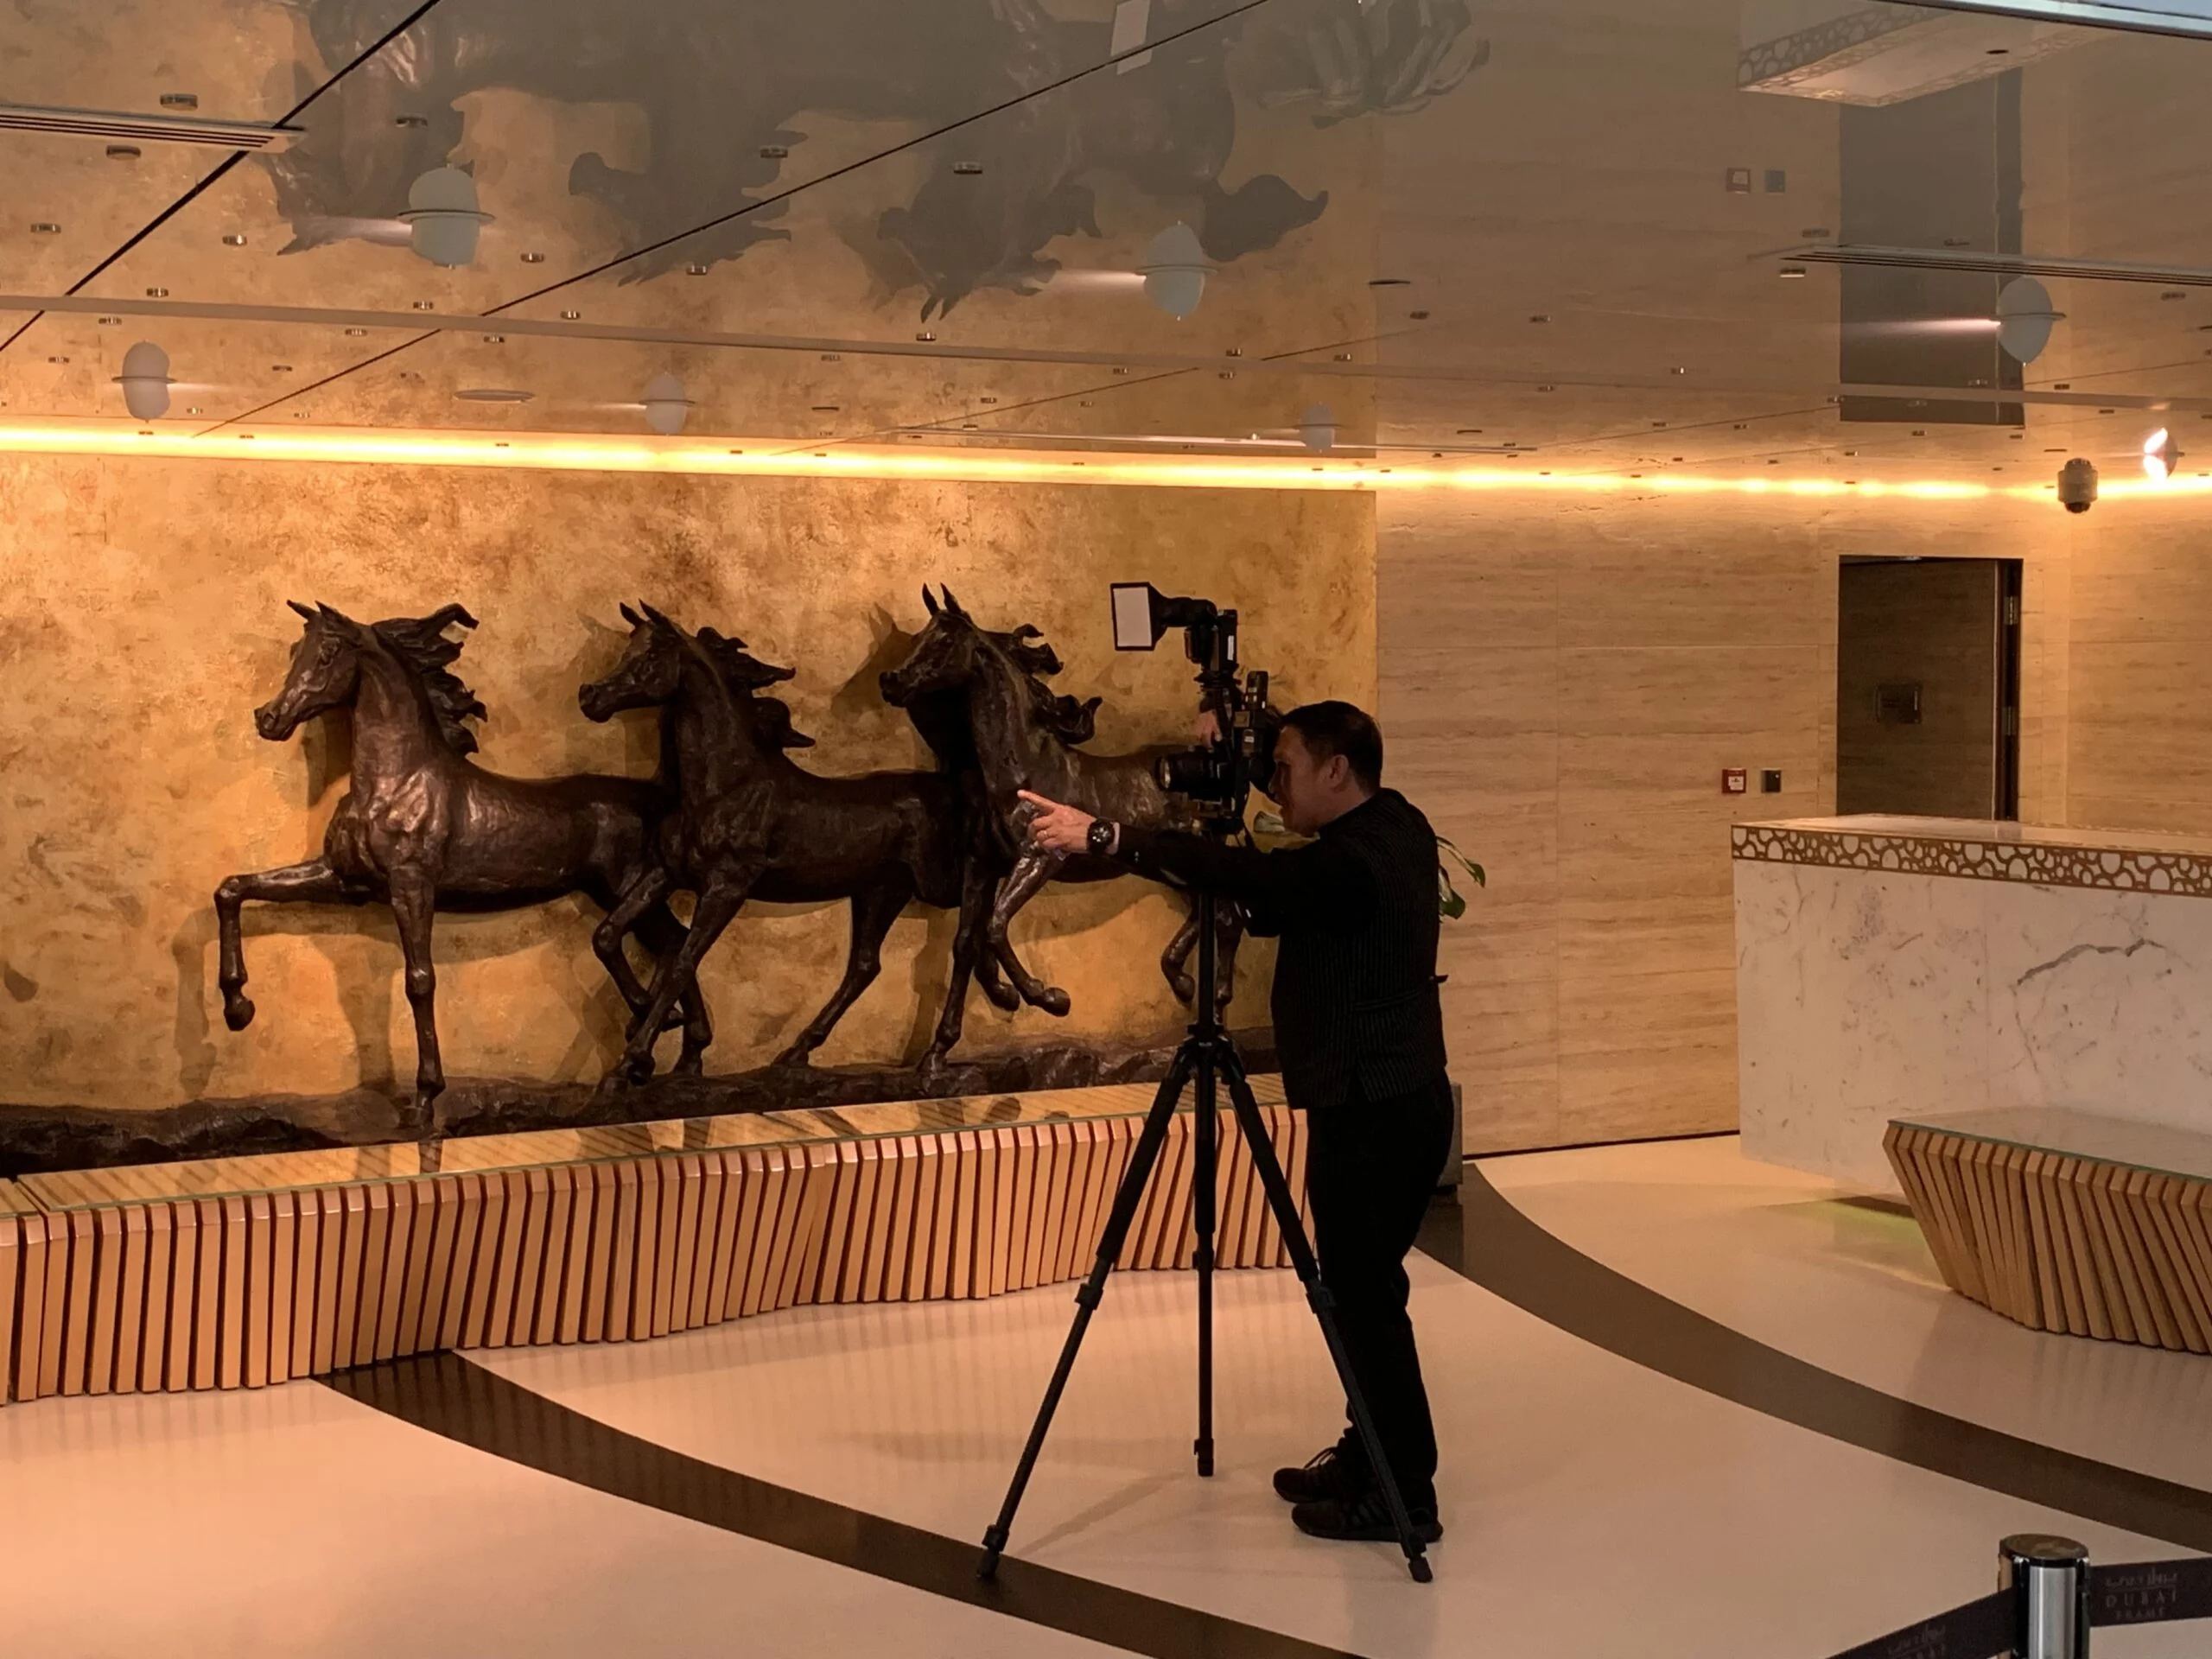 Photoshooting at Dubai Frame